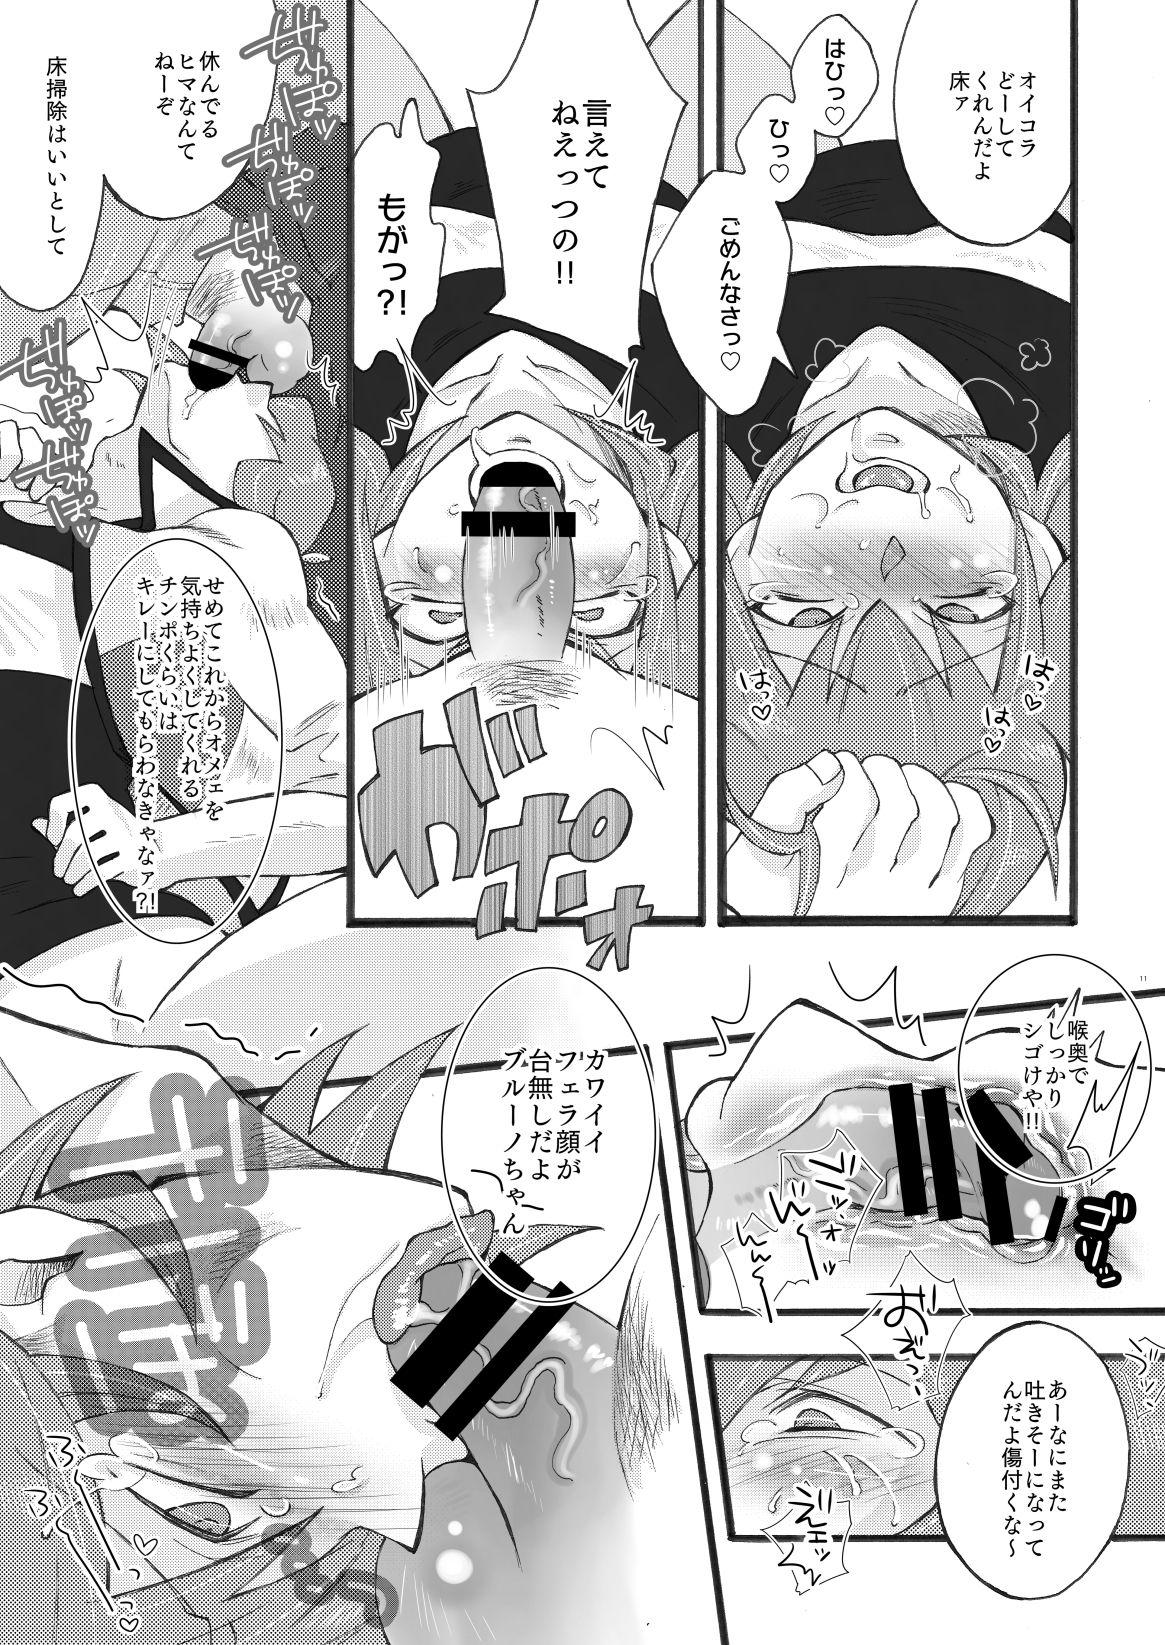 Flashing Dosukebe Burūno-chan no D - Yu-gi-oh 5ds Oil - Page 10